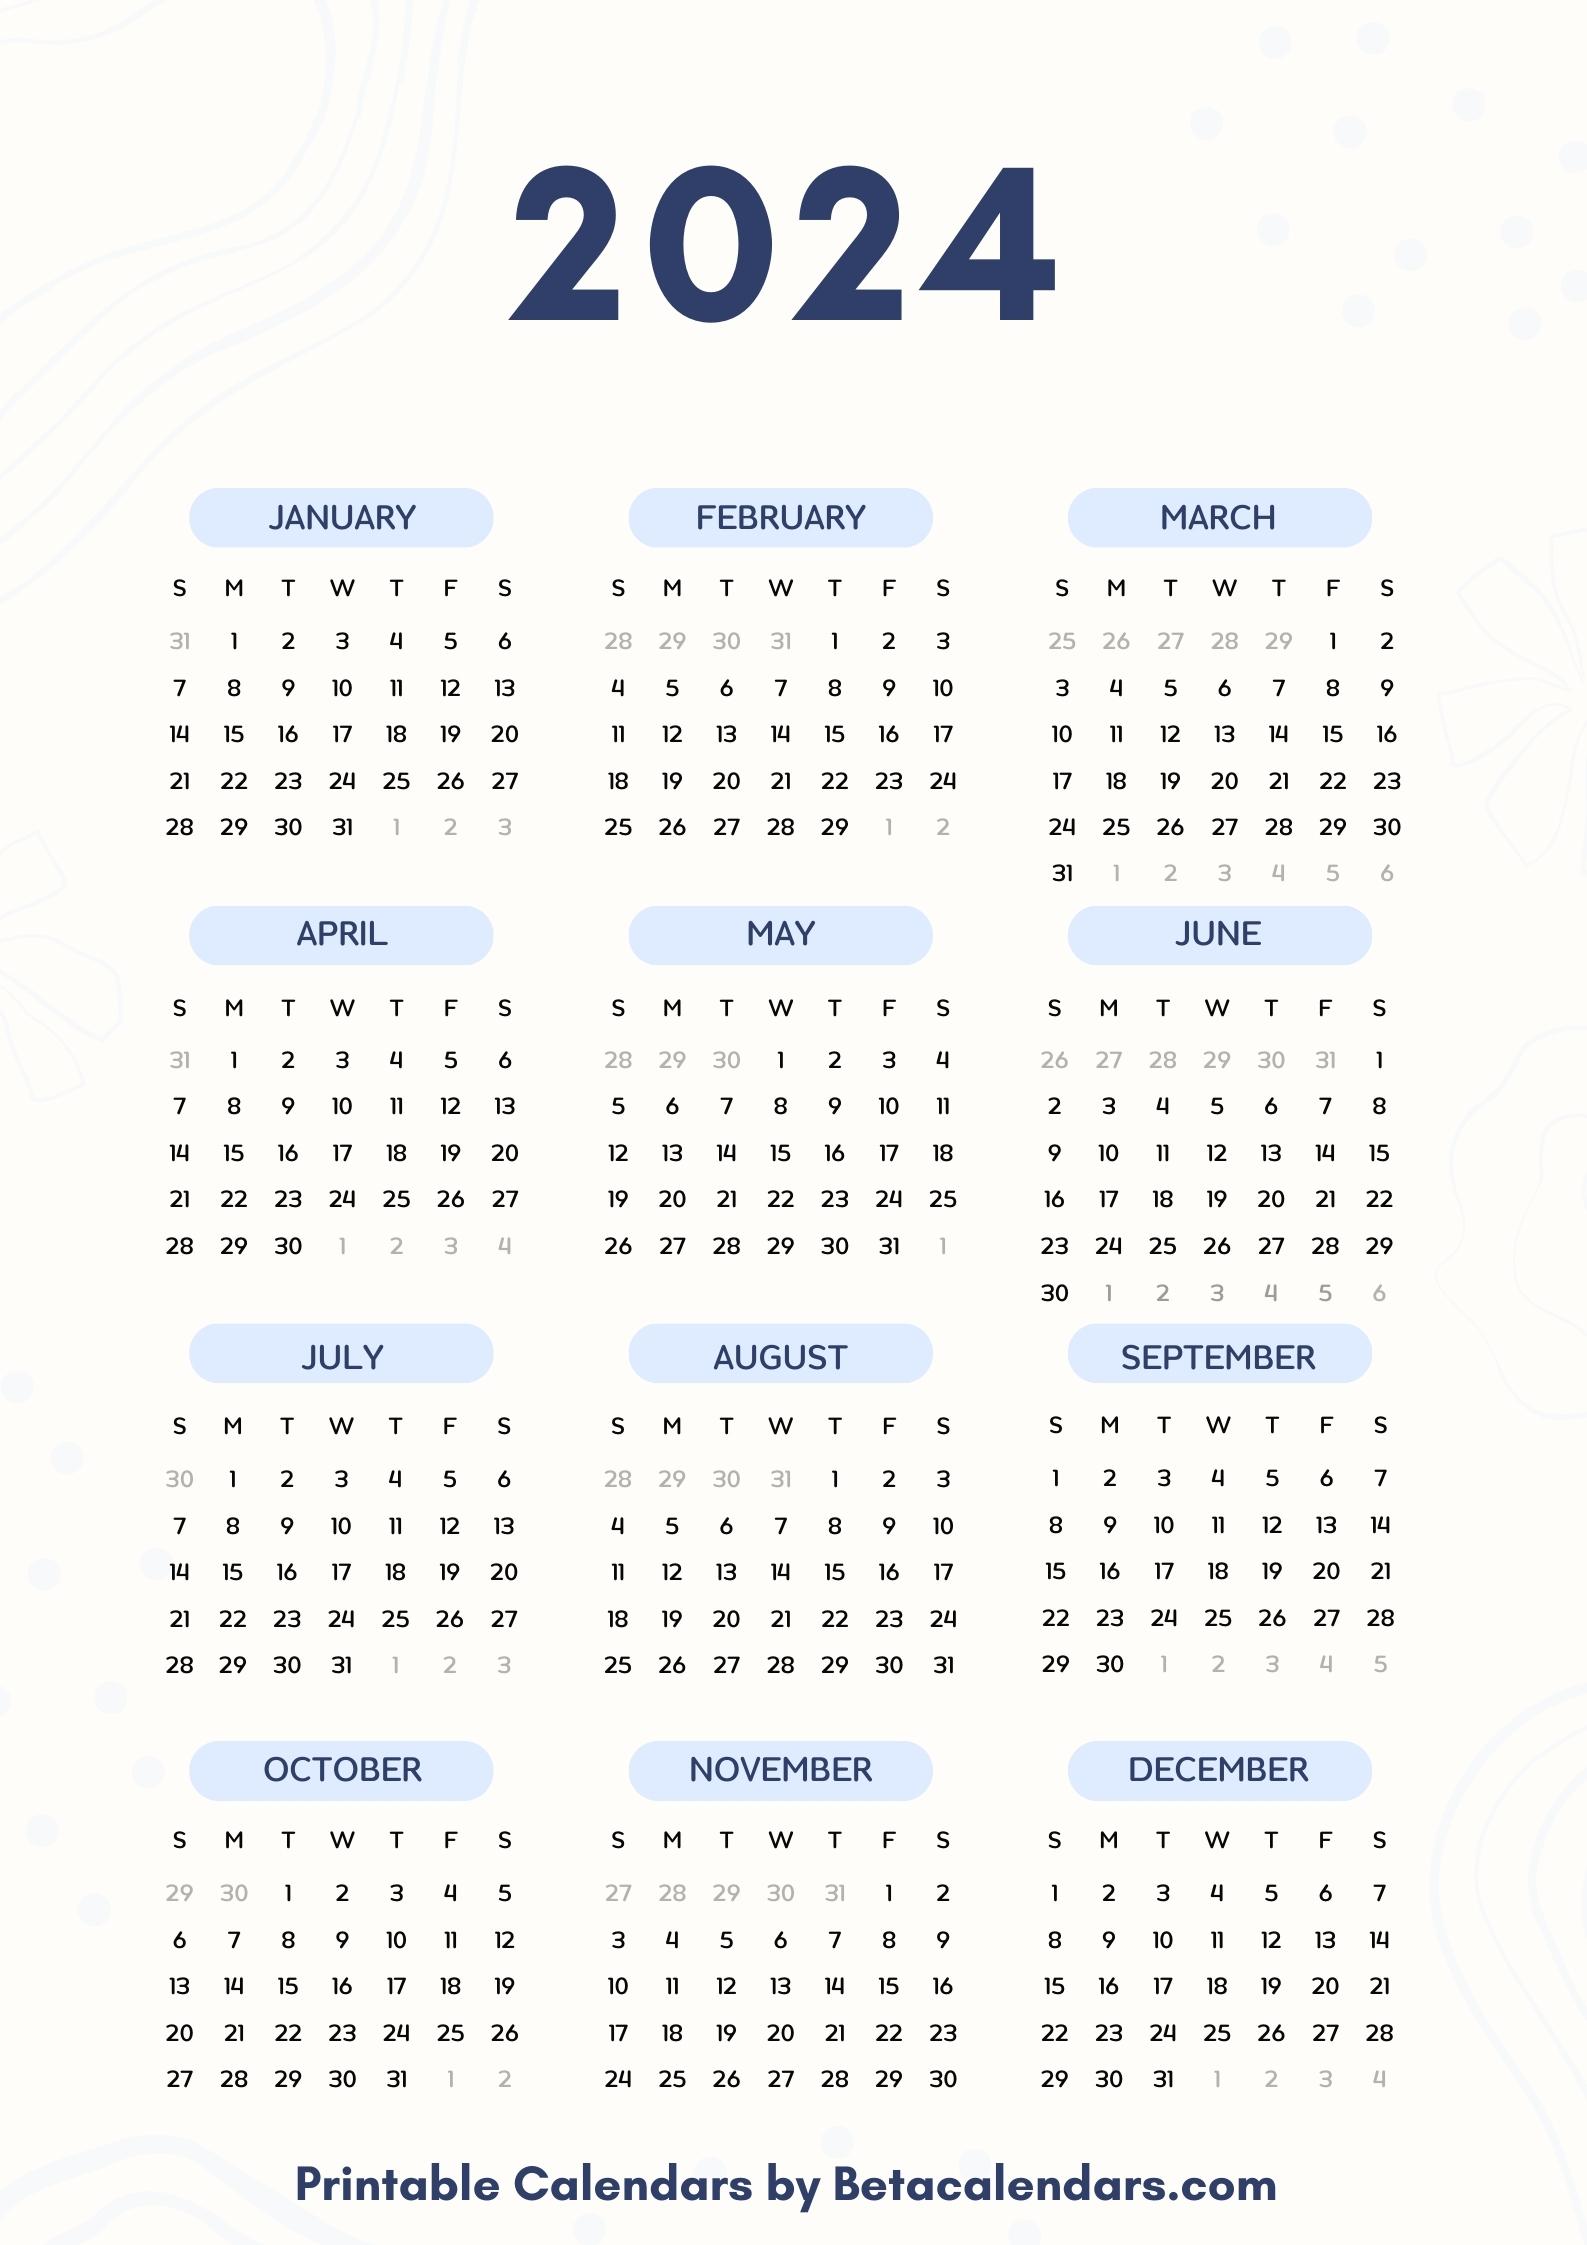 2024 Calendar - Beta Calendars